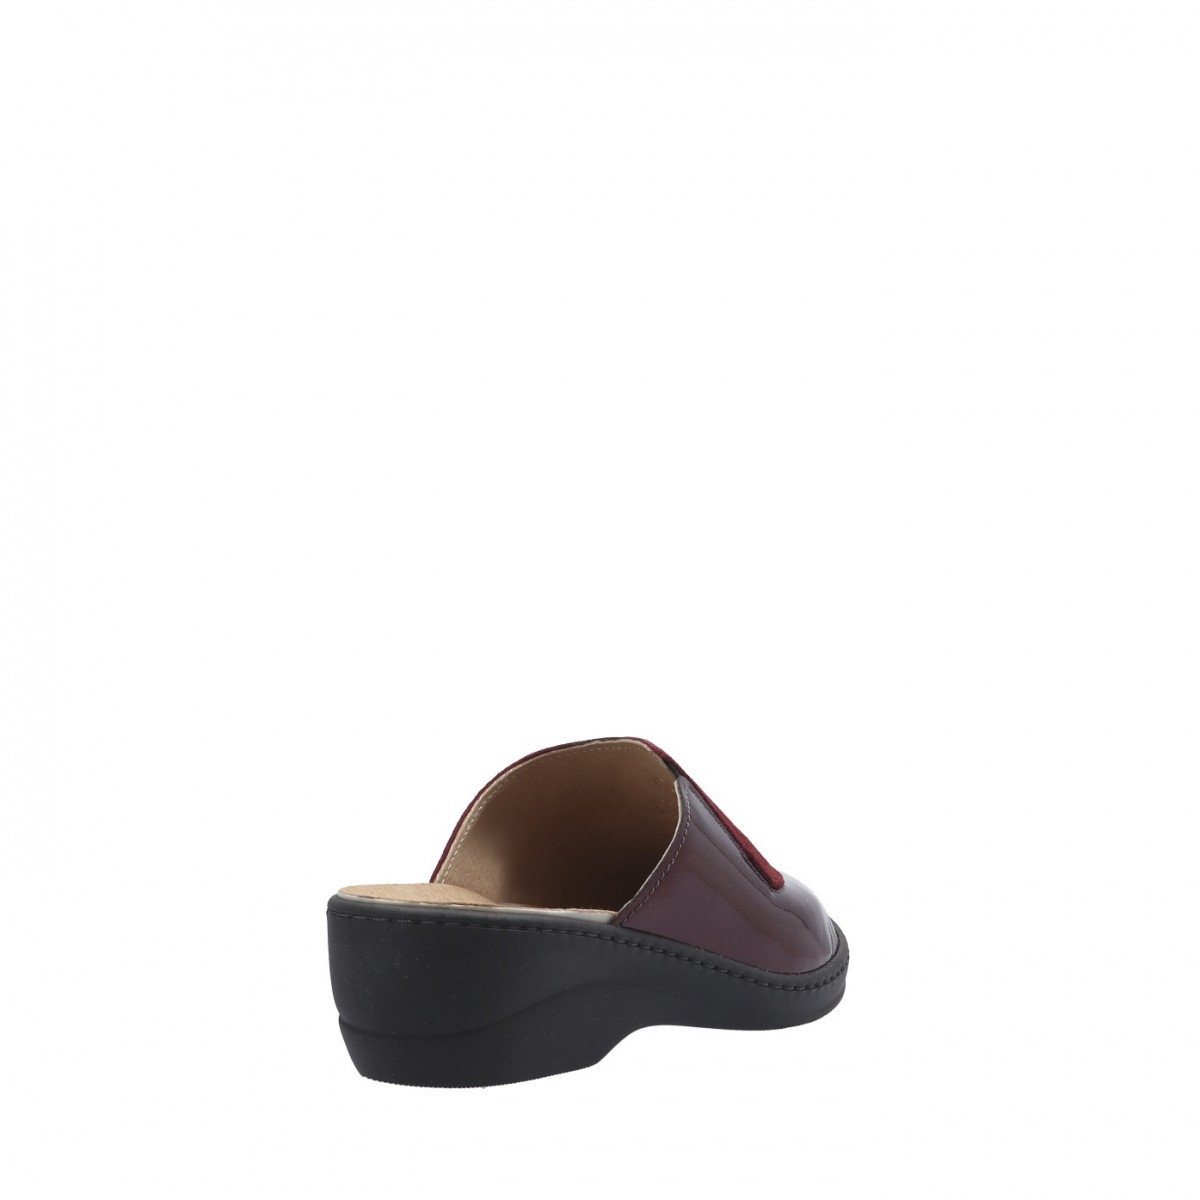 Cinzia soft Pantofola Bordeaux Zeppa IAEH33-CK 002